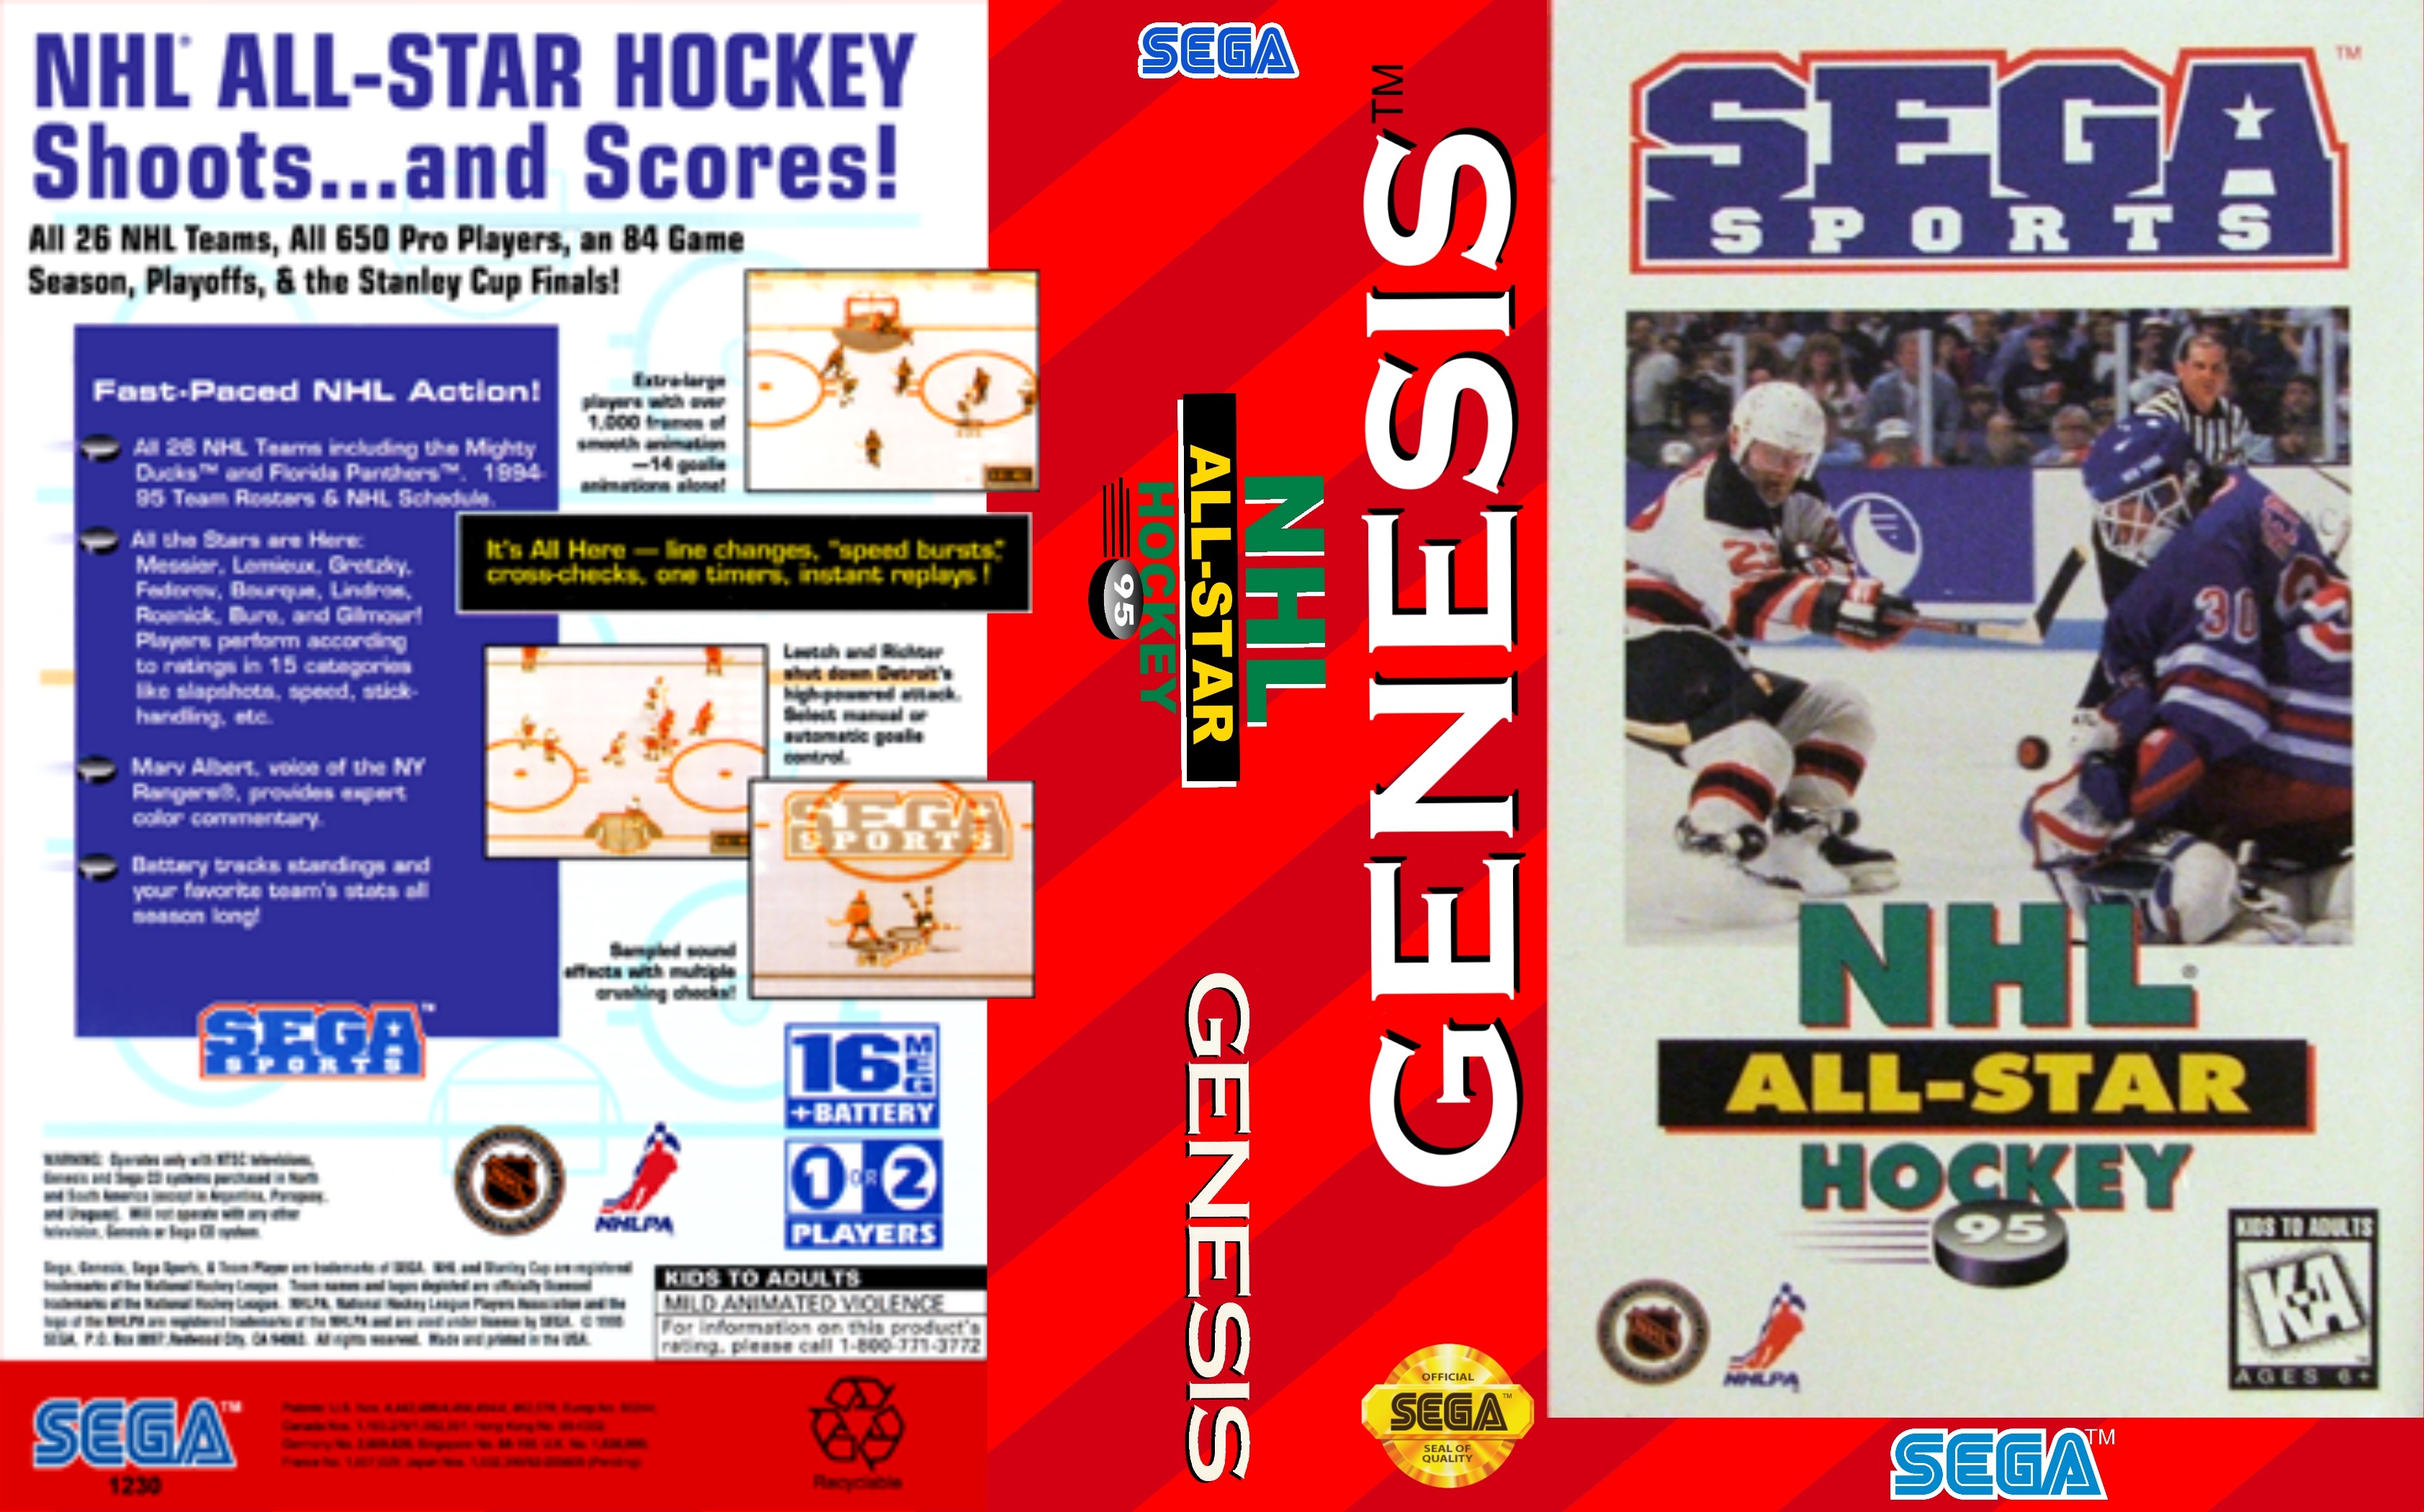 NHL All-Star 95 box cover